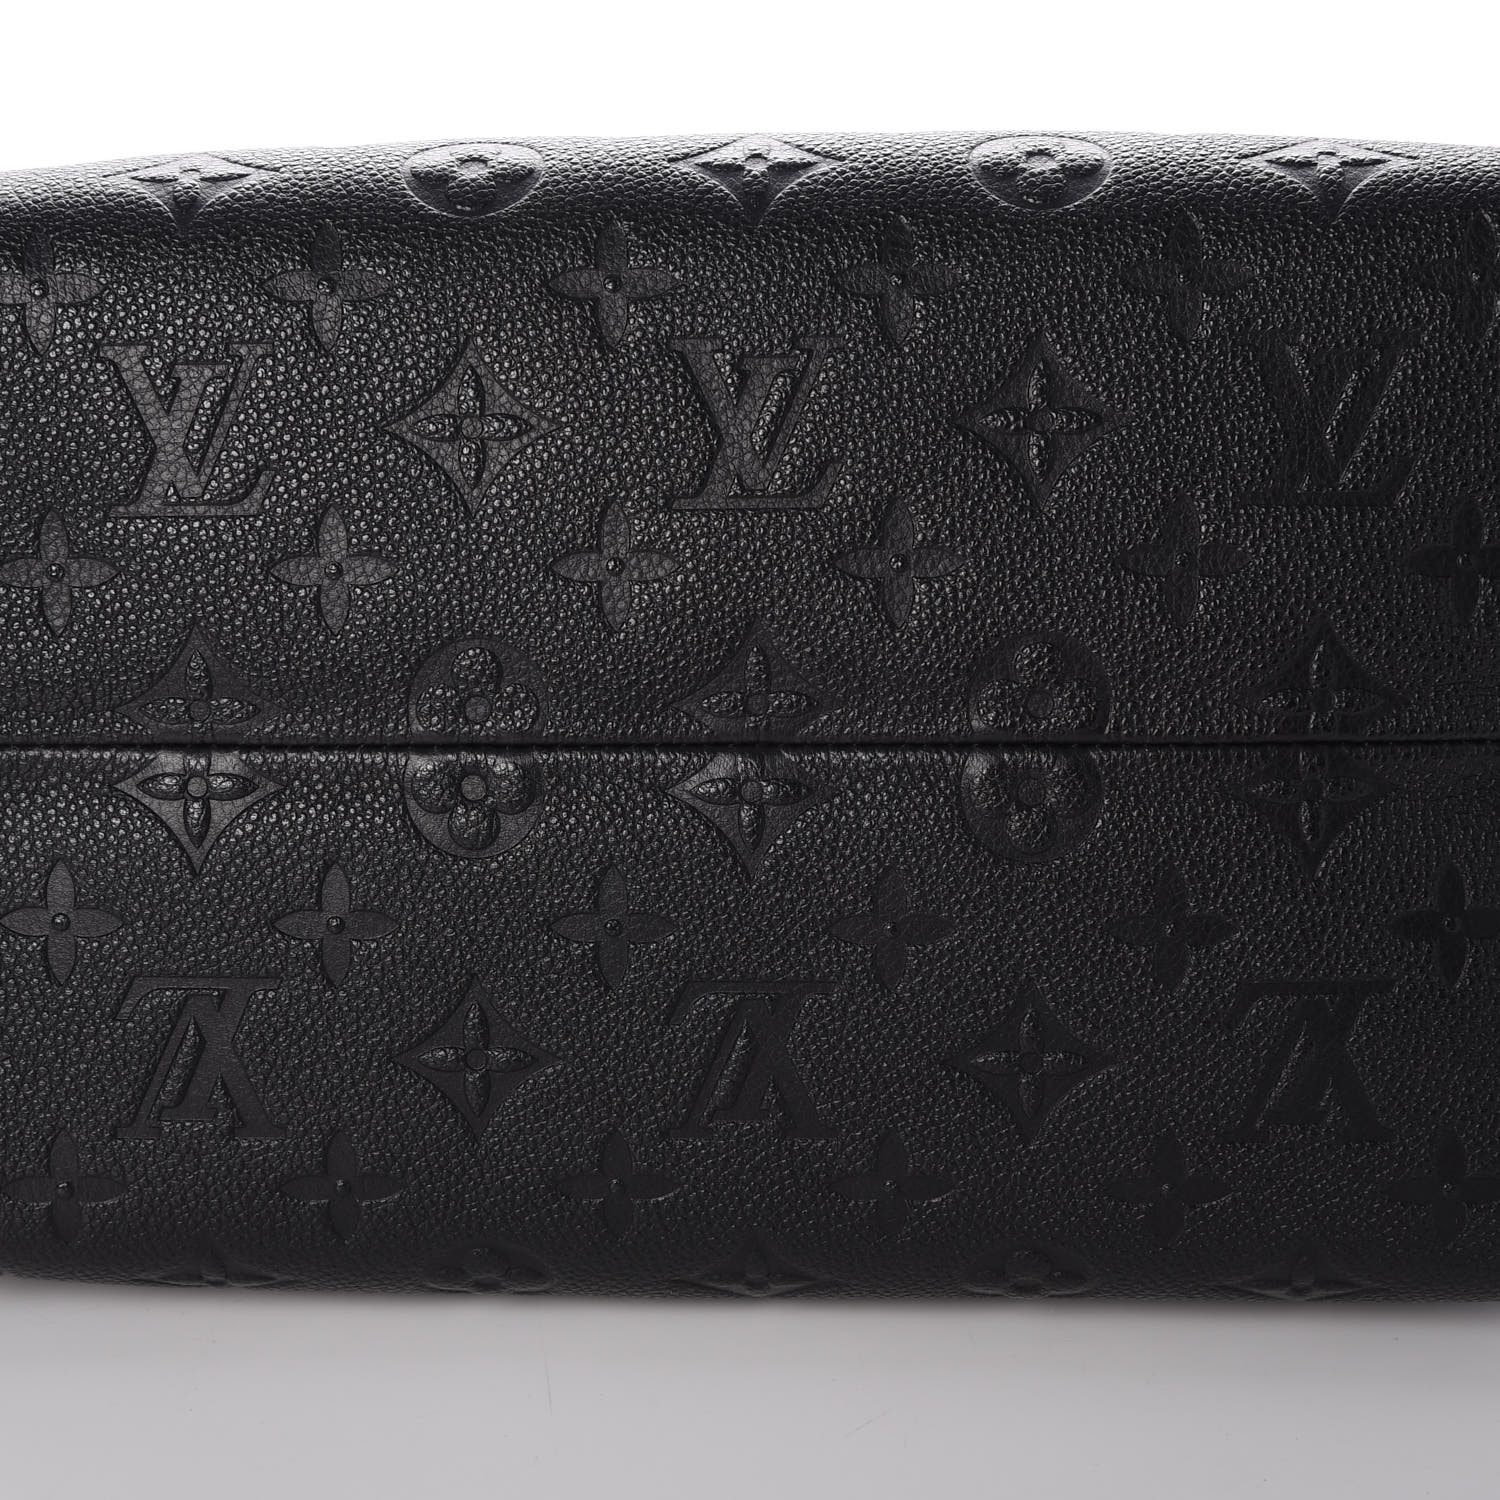 Louis Vuitton Speedy 25 Empreinte Noir